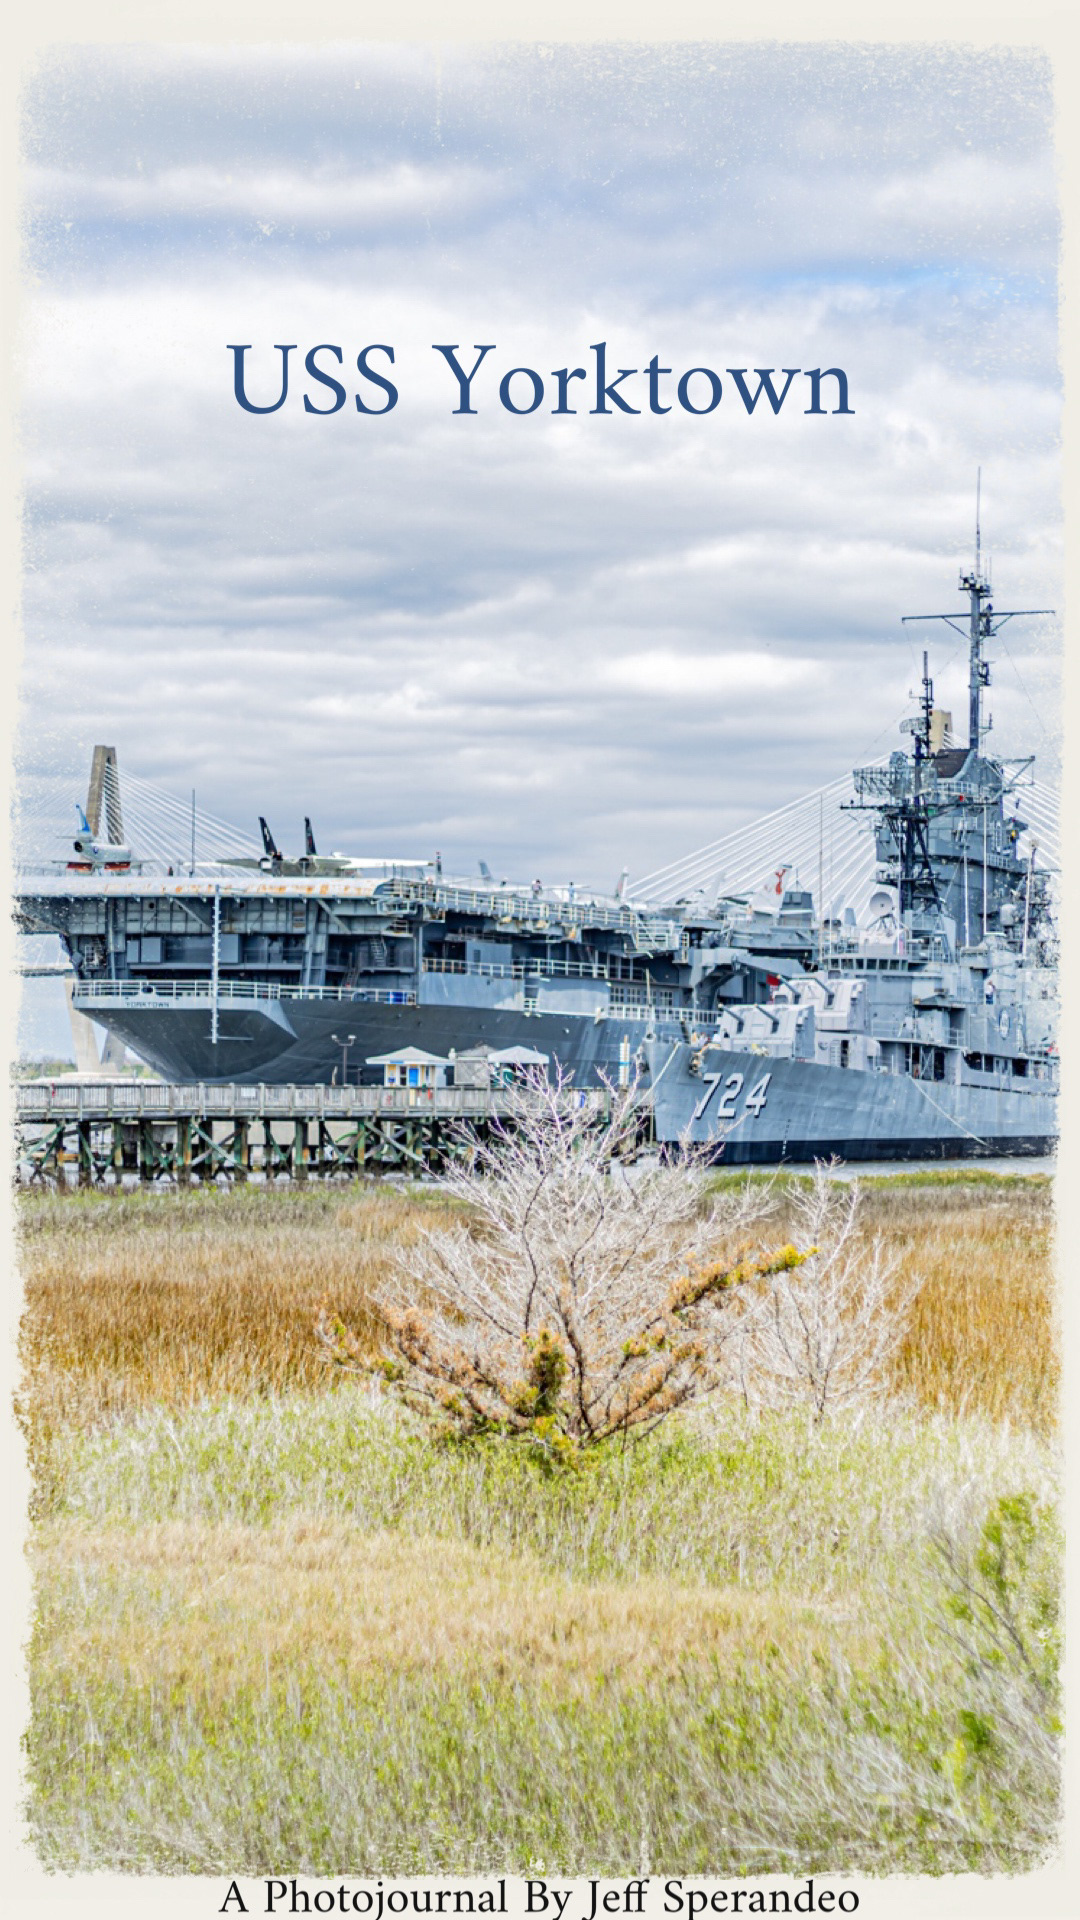 carrier charleston history navy ship south carolina